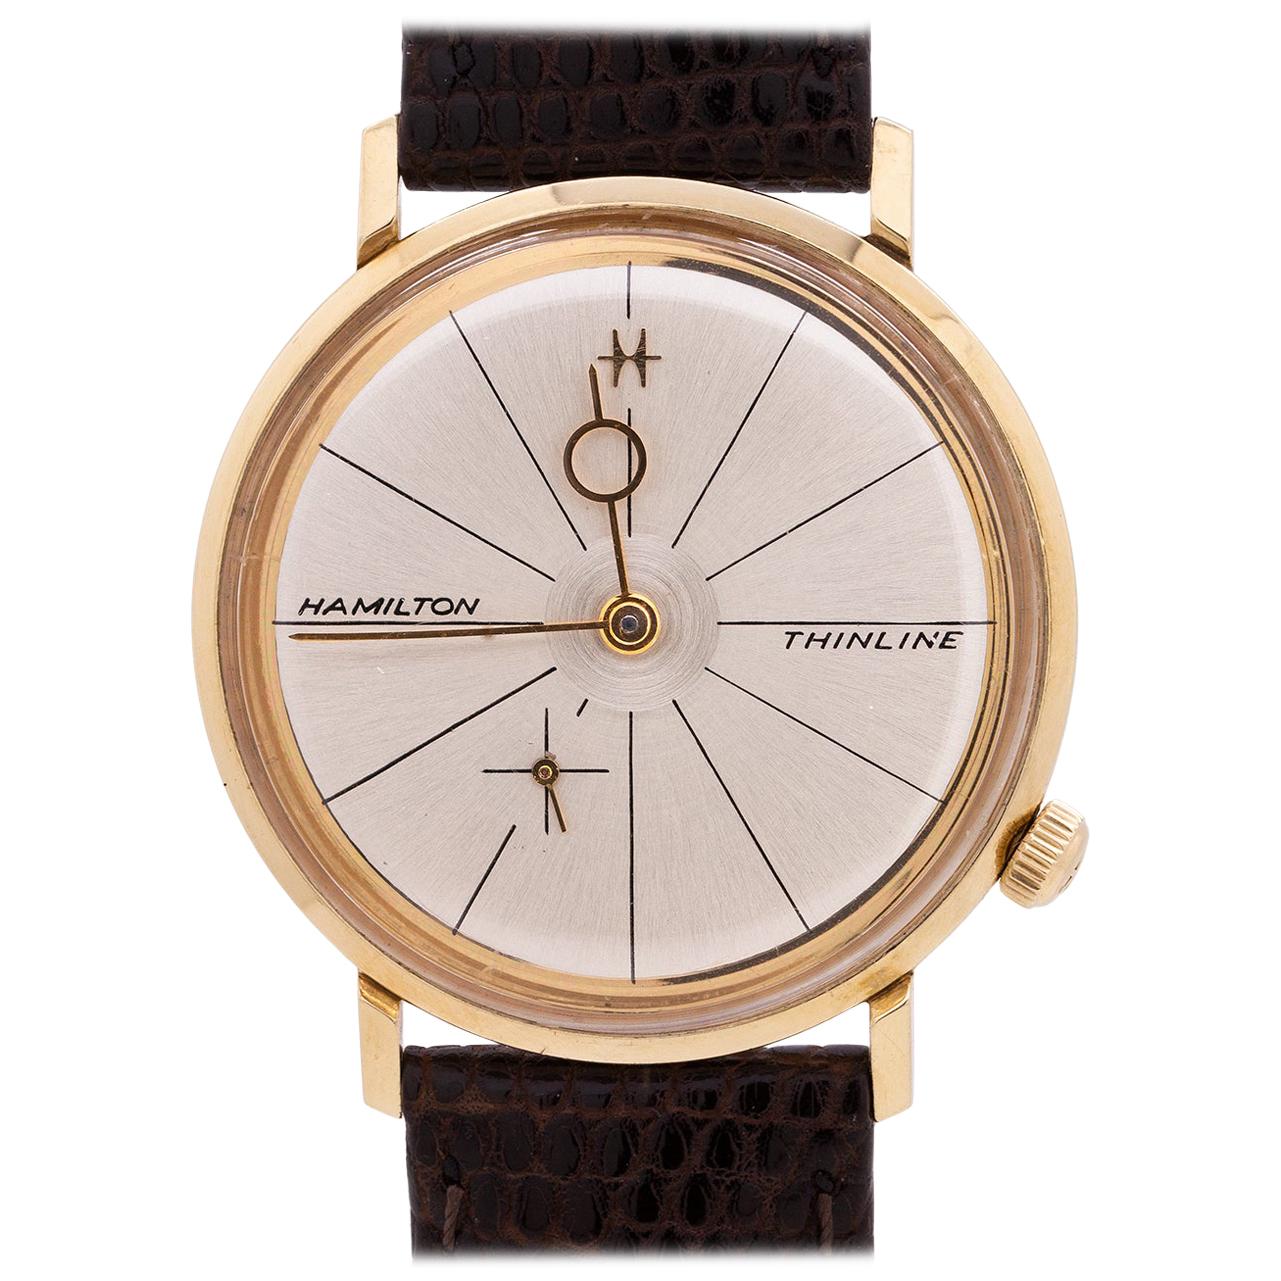 Hamilton Thinline 4002 Gold Filled Wristwatch, circa 1962